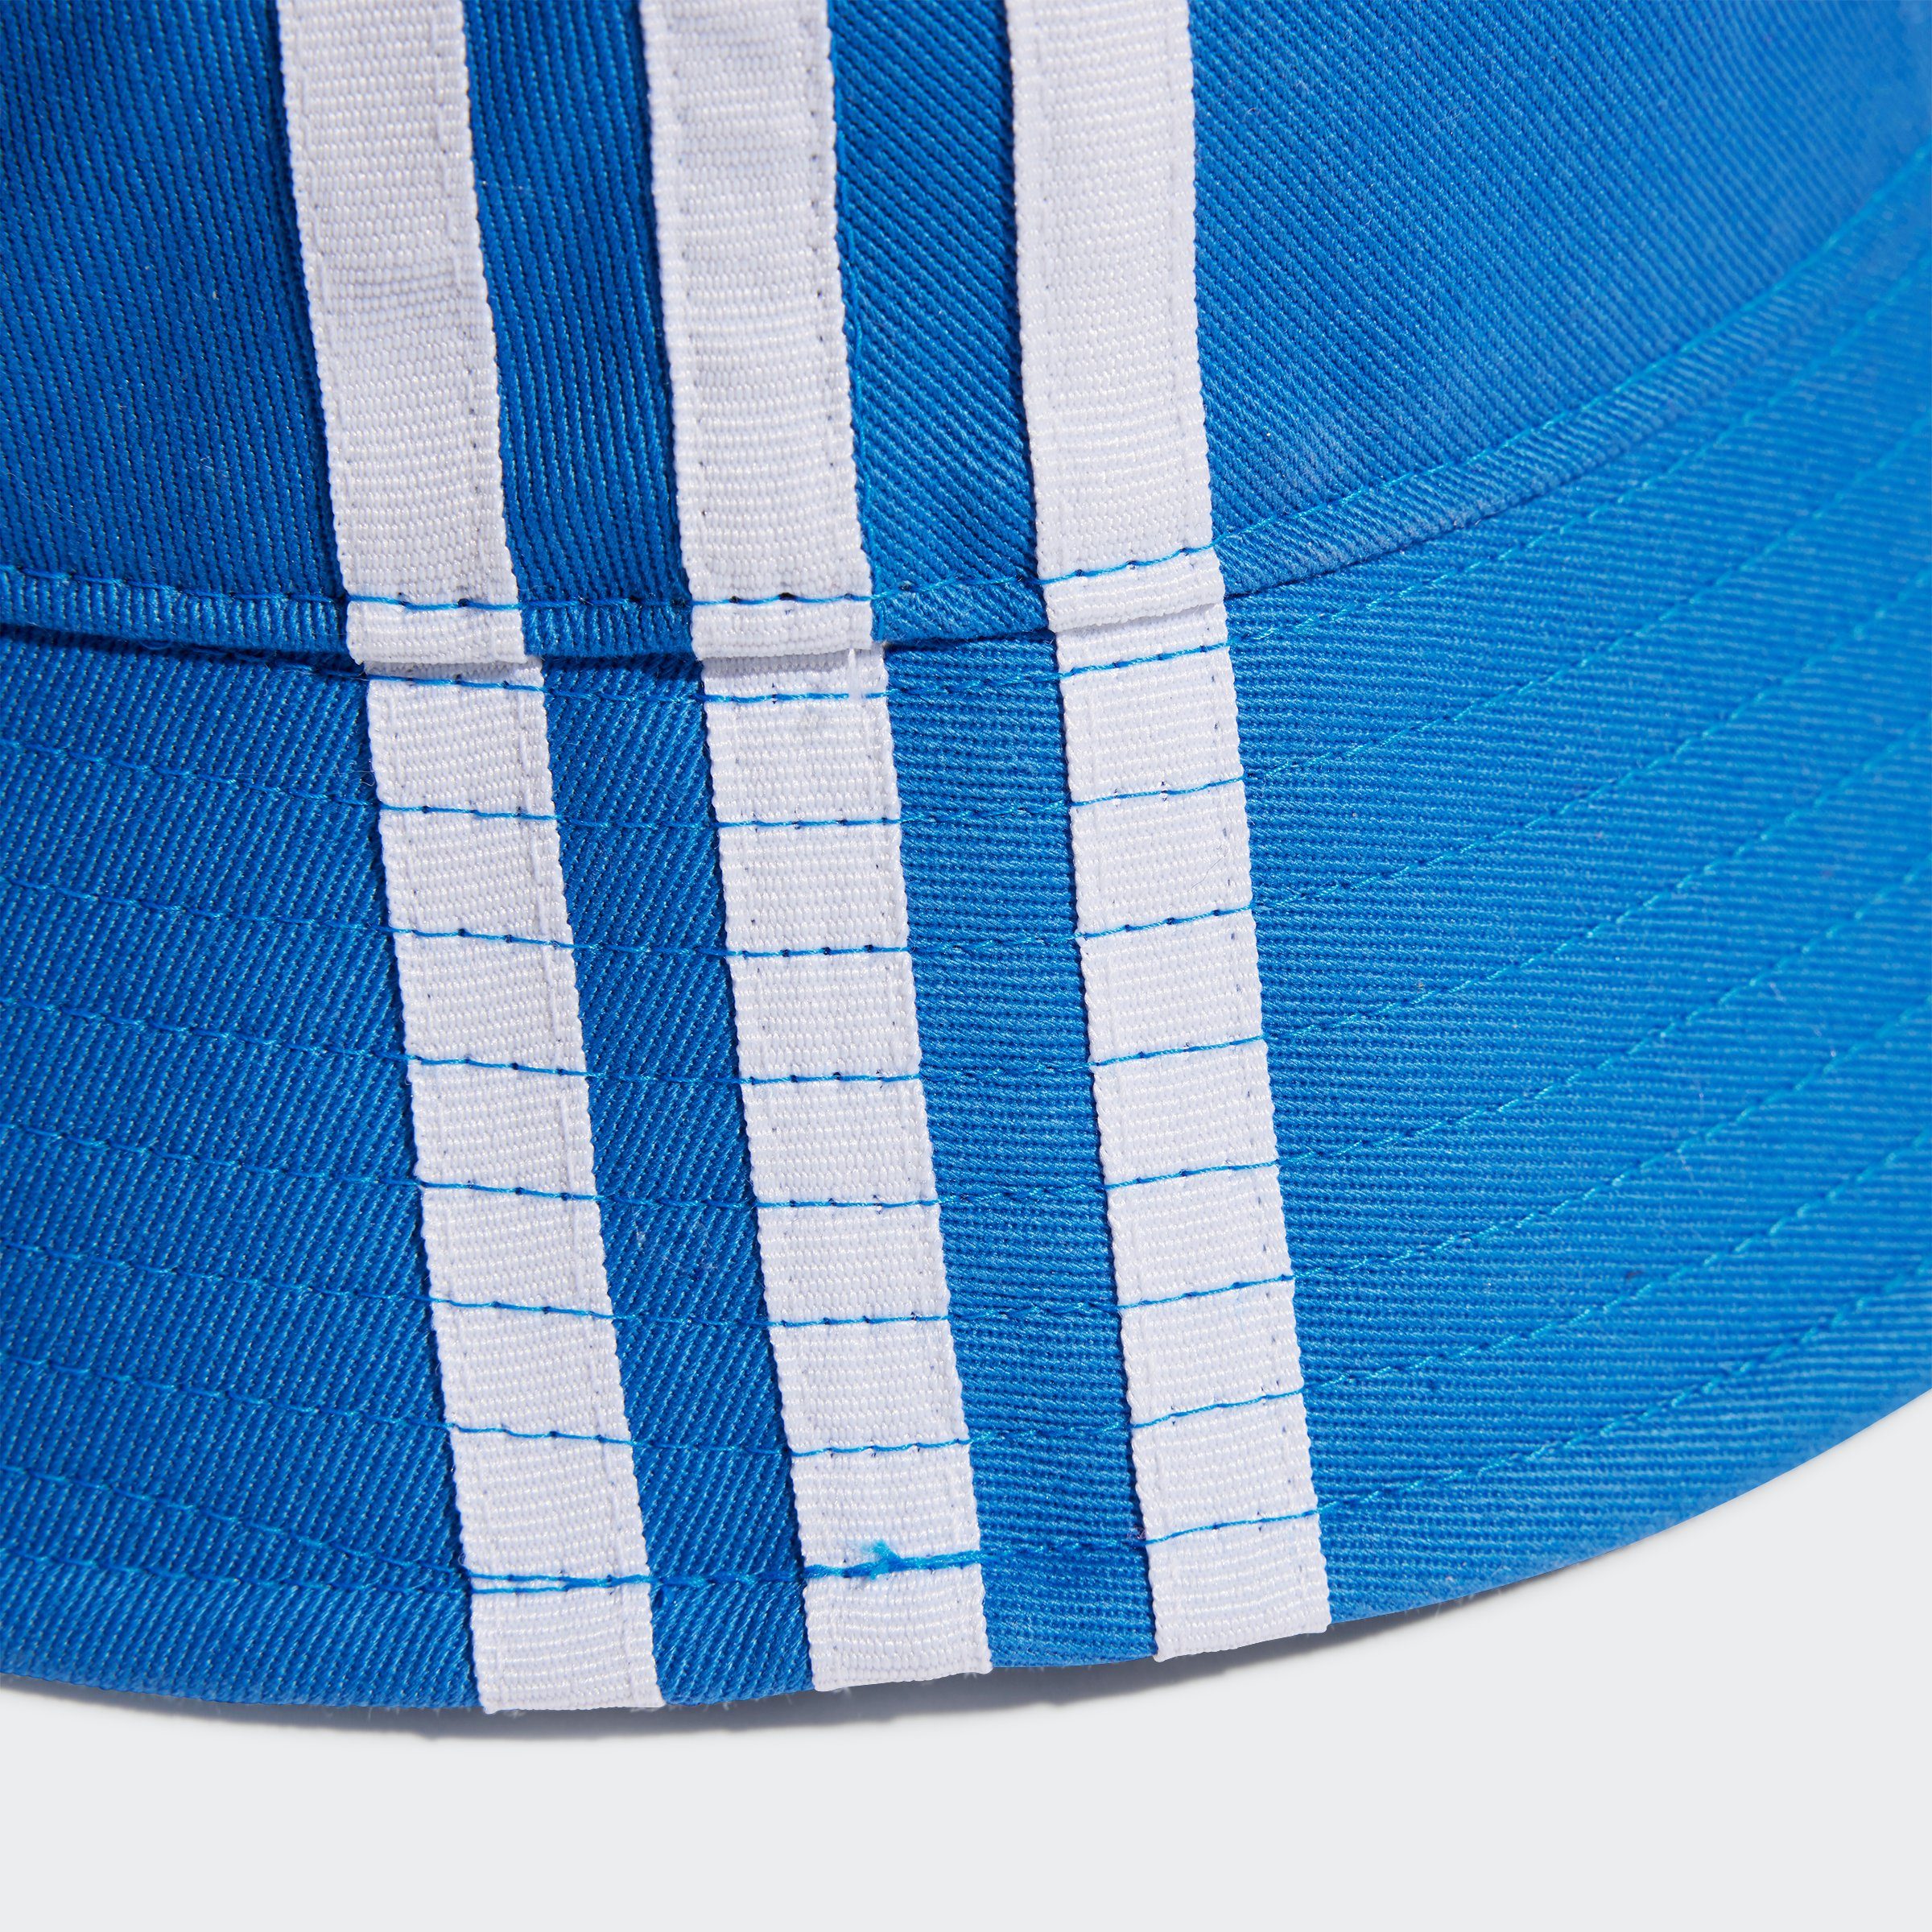 AC BLUBIR Baseball adidas Originals BUCKET HAT Cap